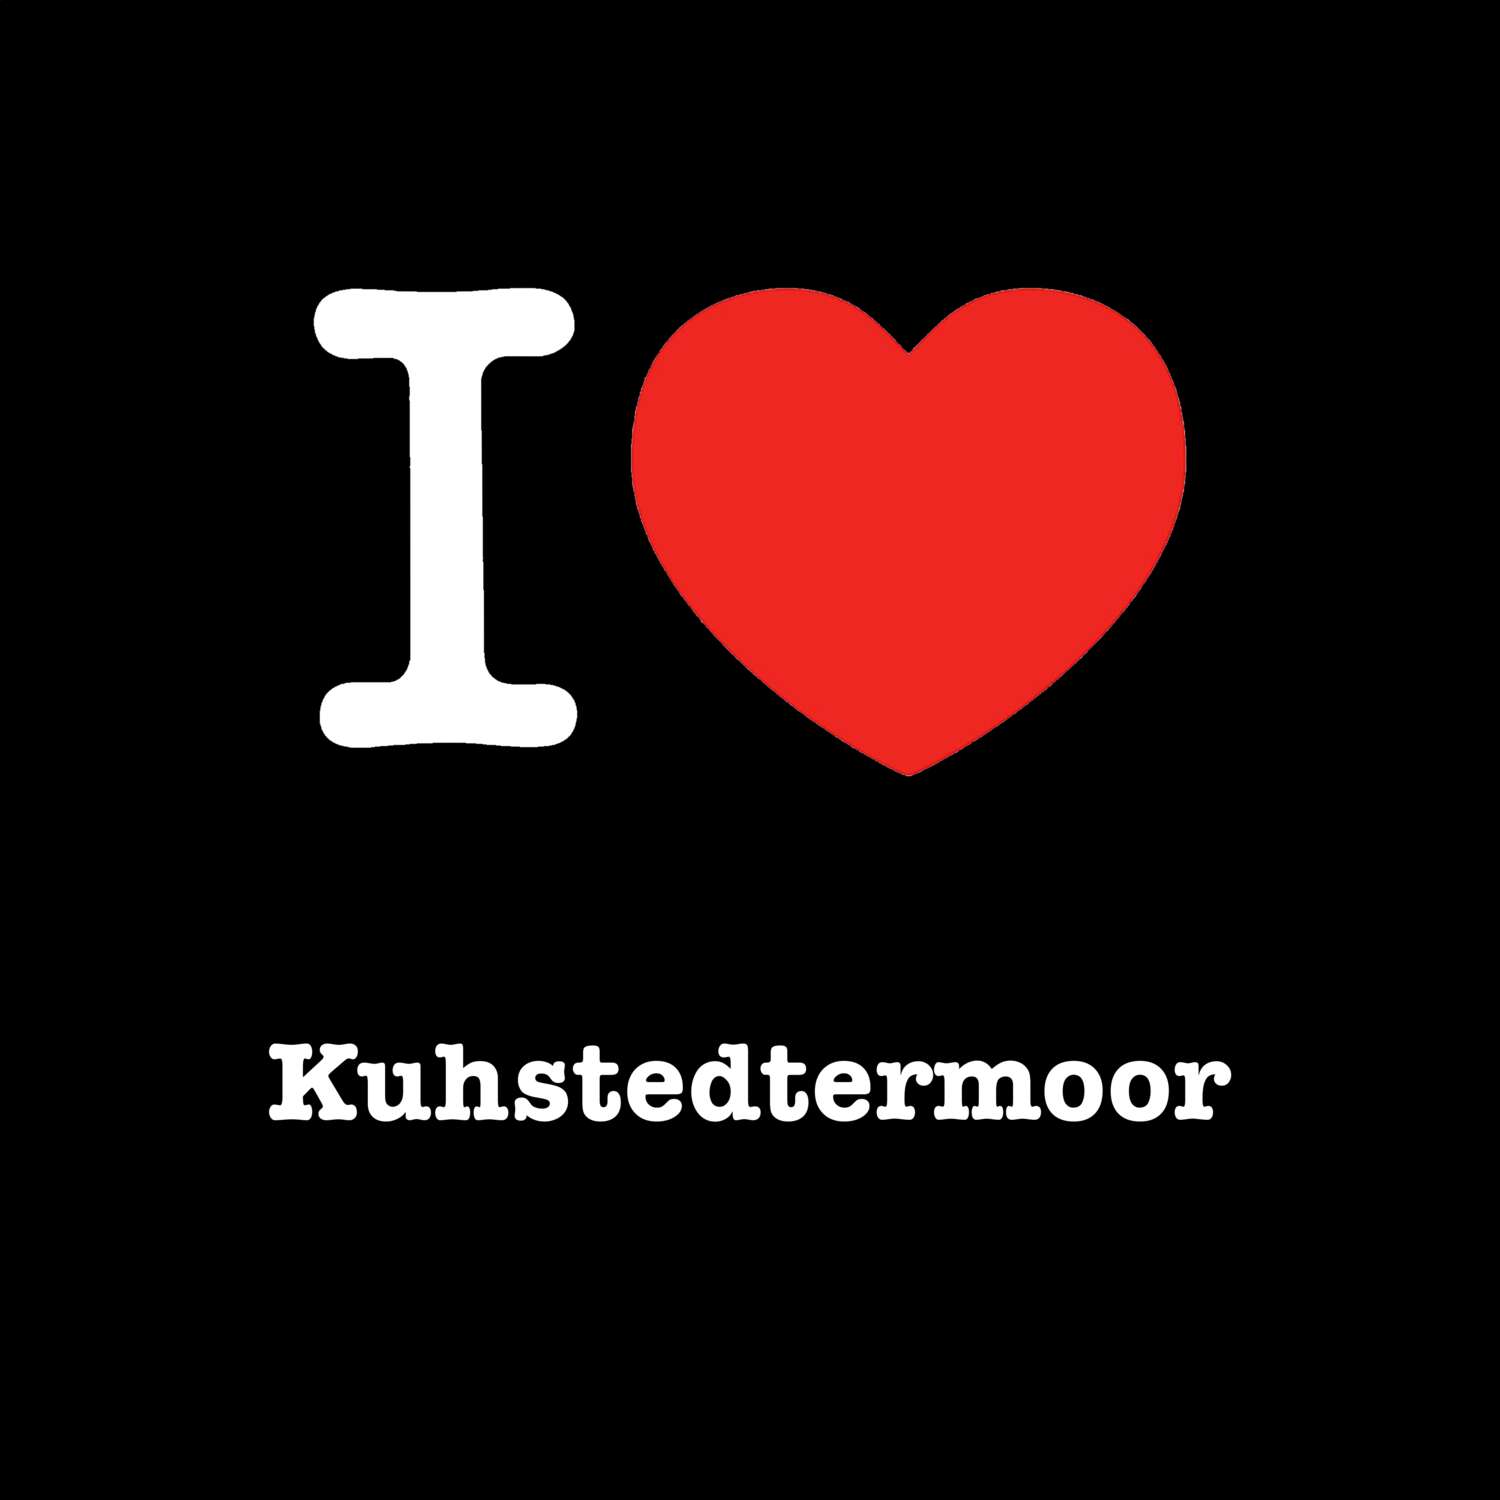 Kuhstedtermoor T-Shirt »I love«